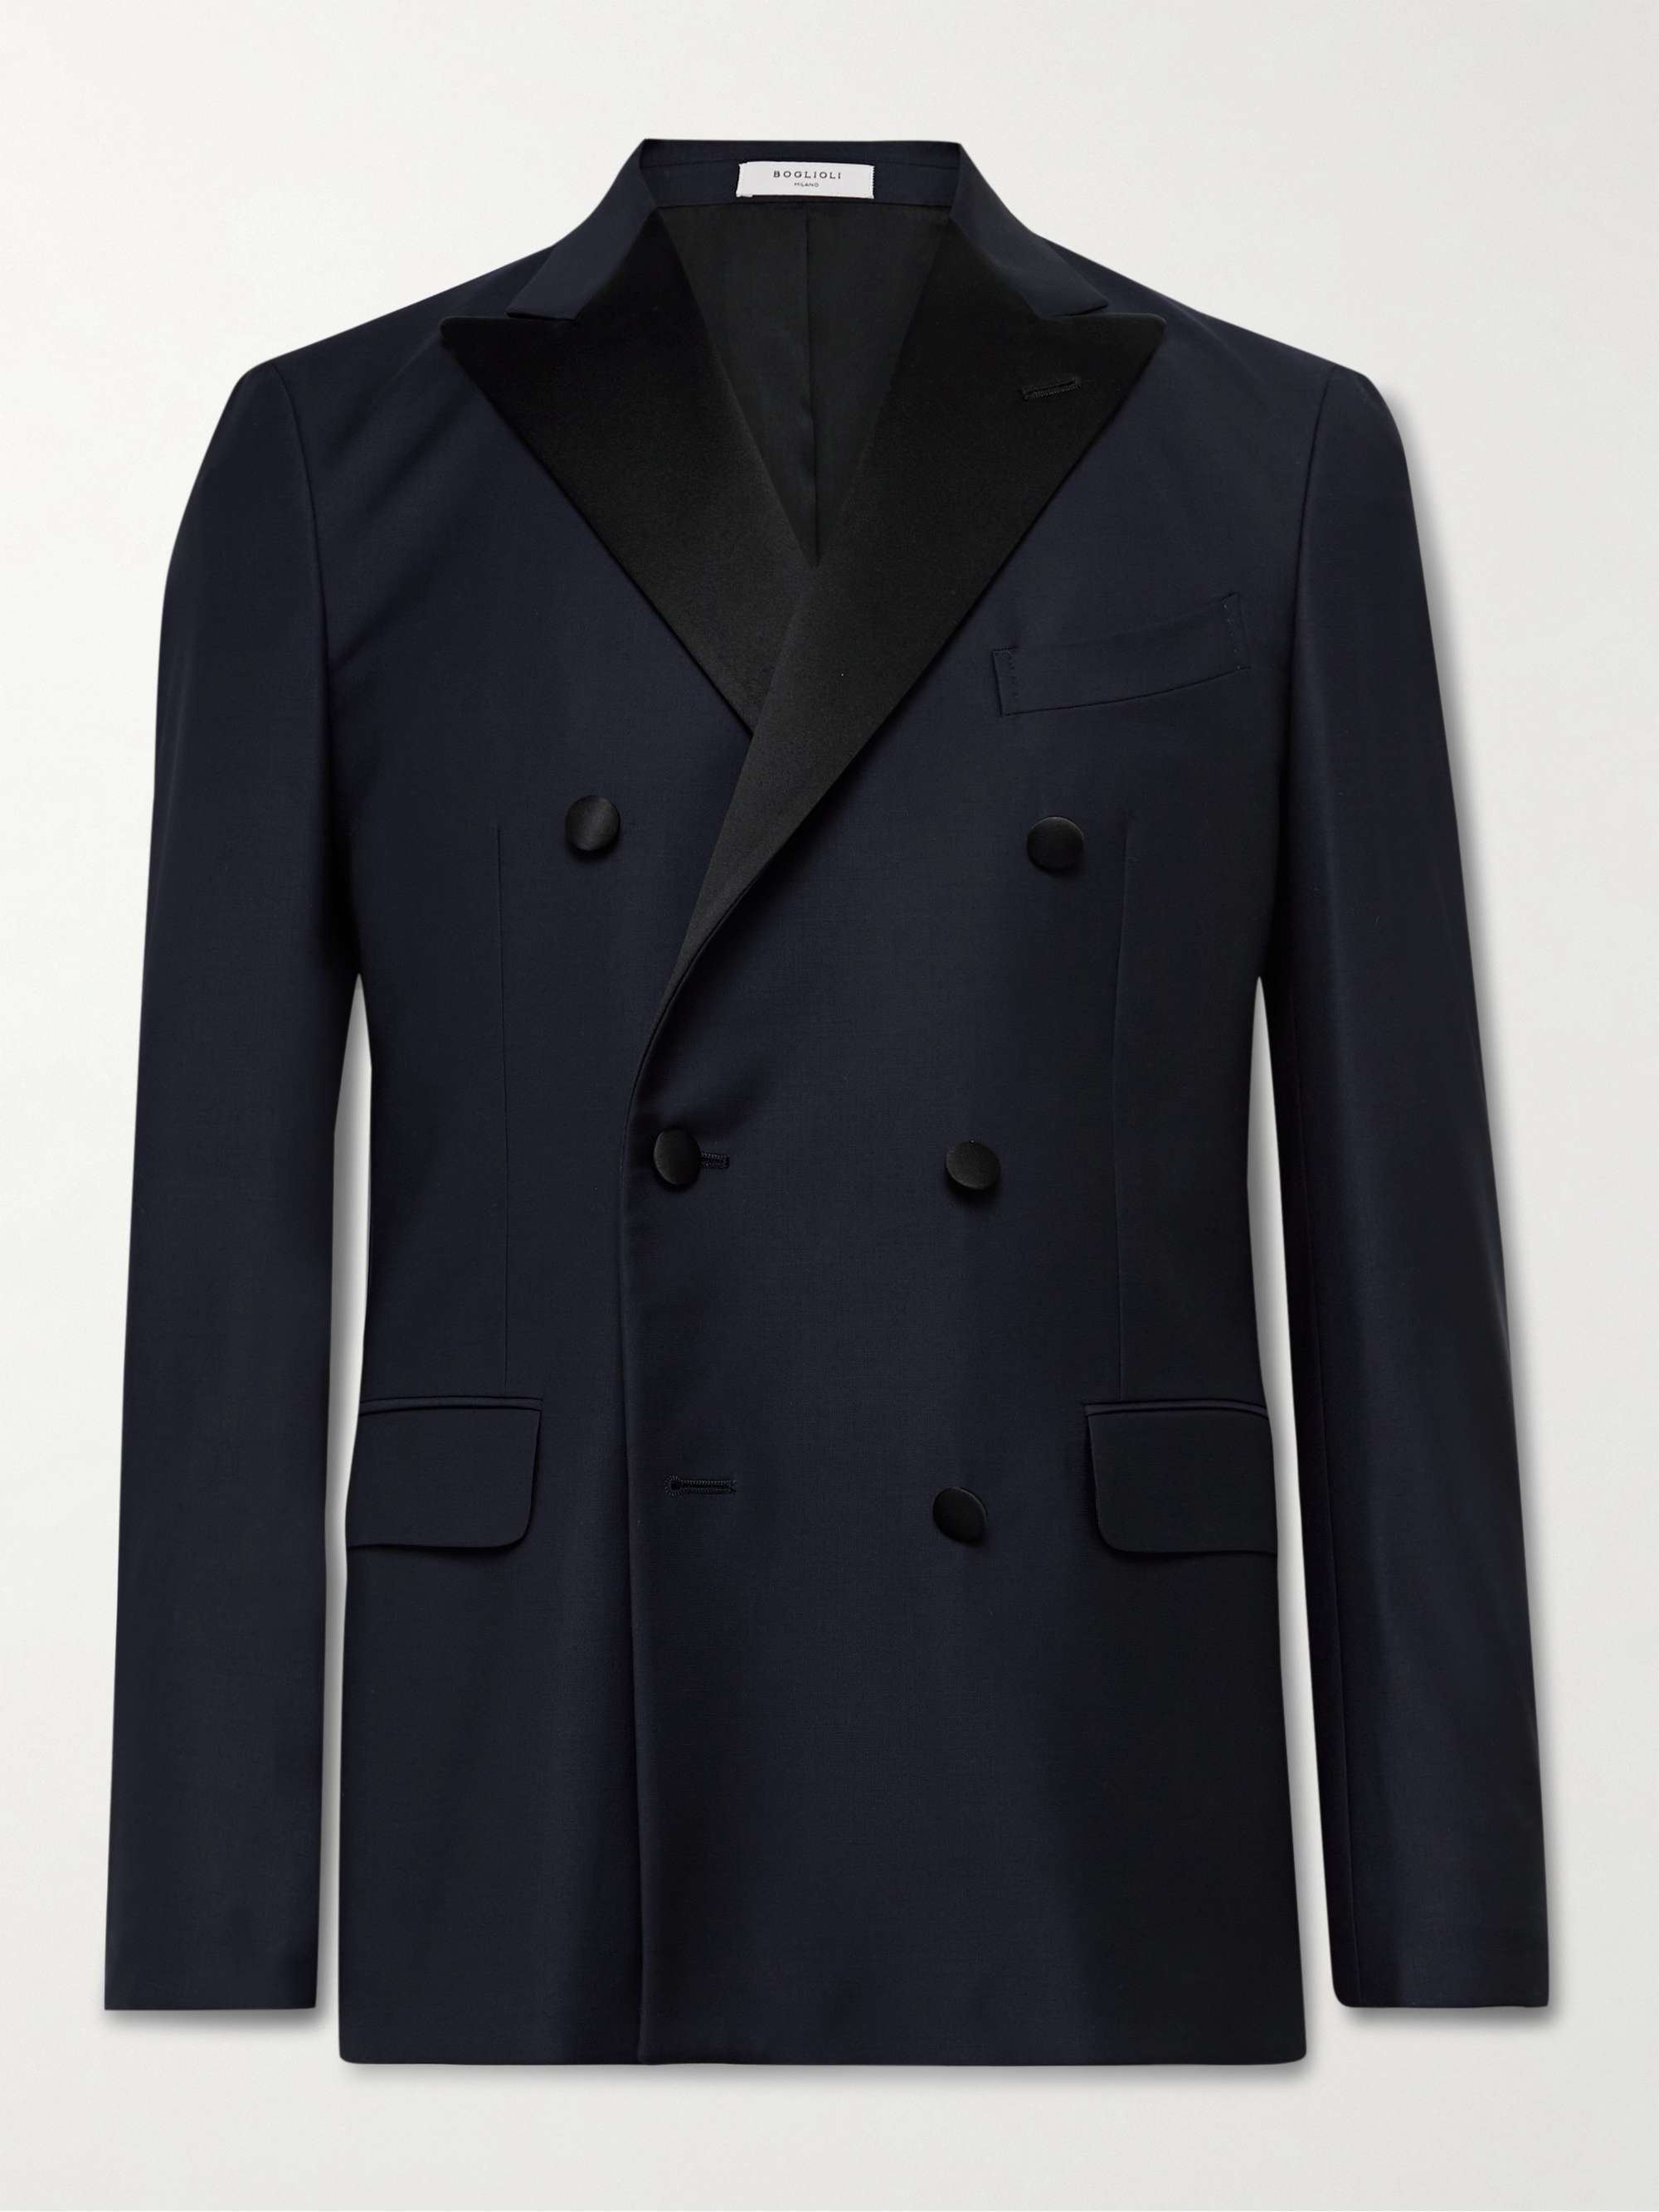 BOGLIOLI Double-Breasted Satin-Trimmed Wool-Blend Tuxedo Jacket